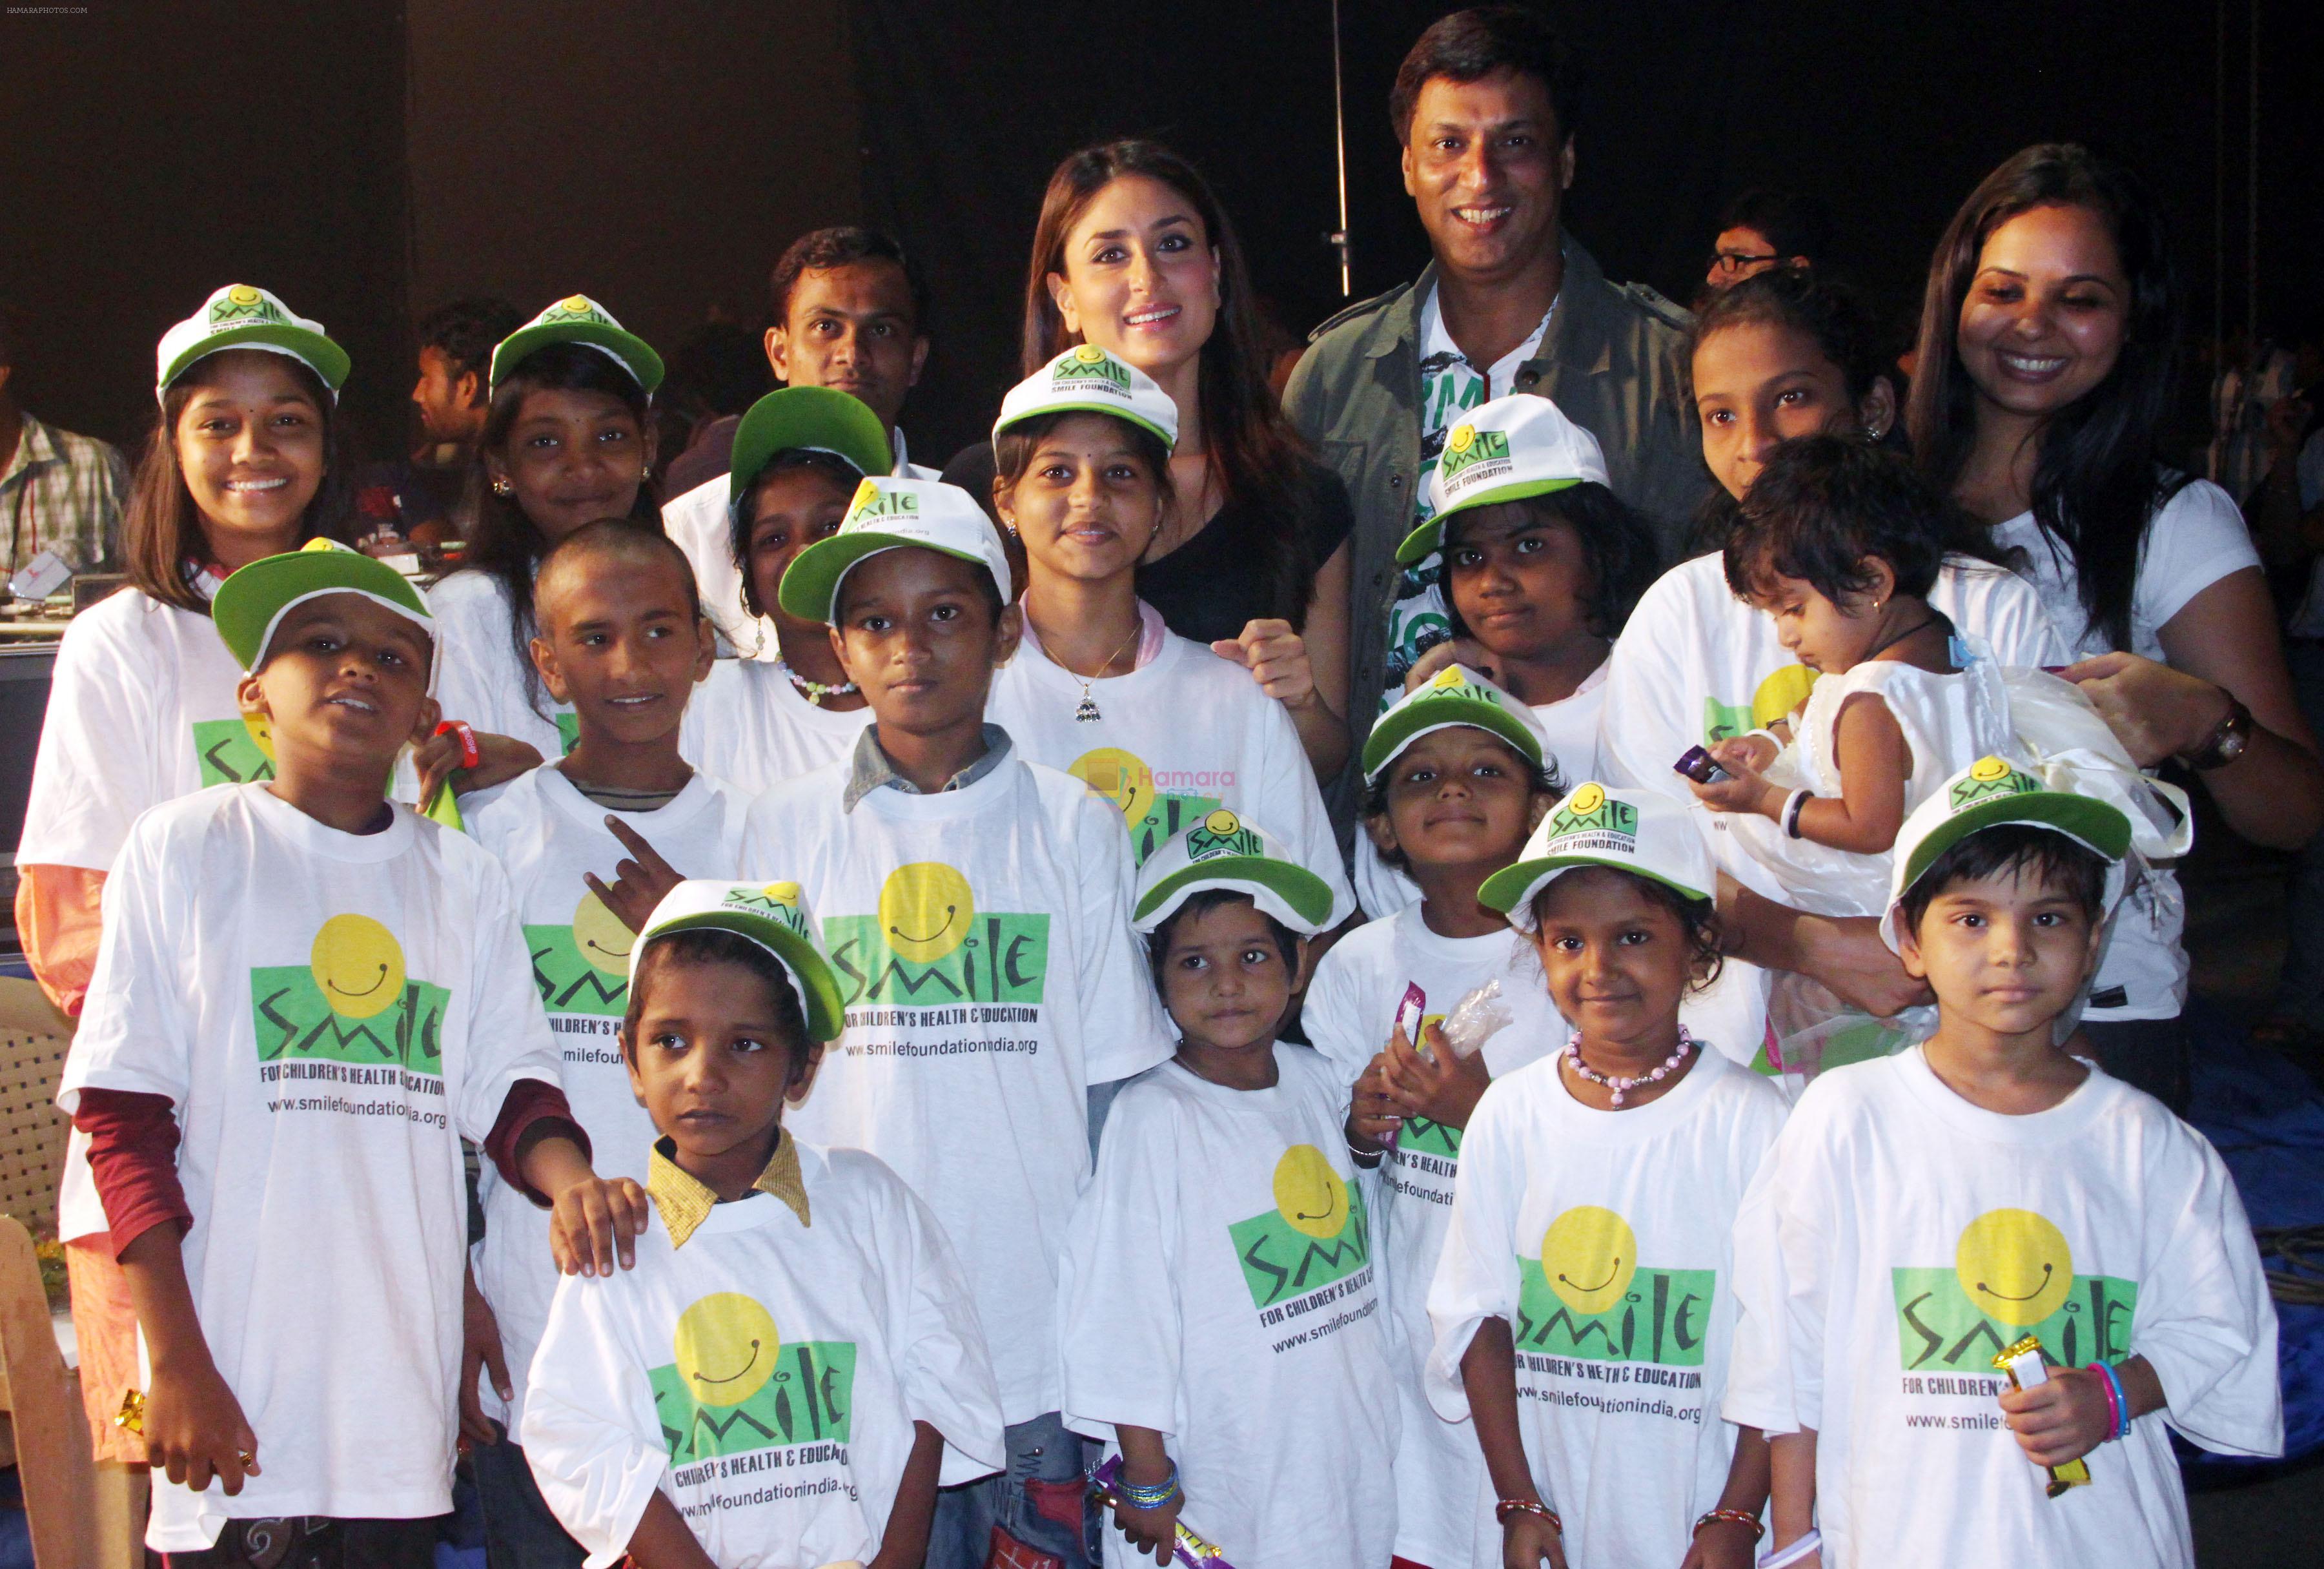 Madhur Bhandarkar and Kareena Kapoor along with the kids of Smile Foundation on the set of film _Heroine_